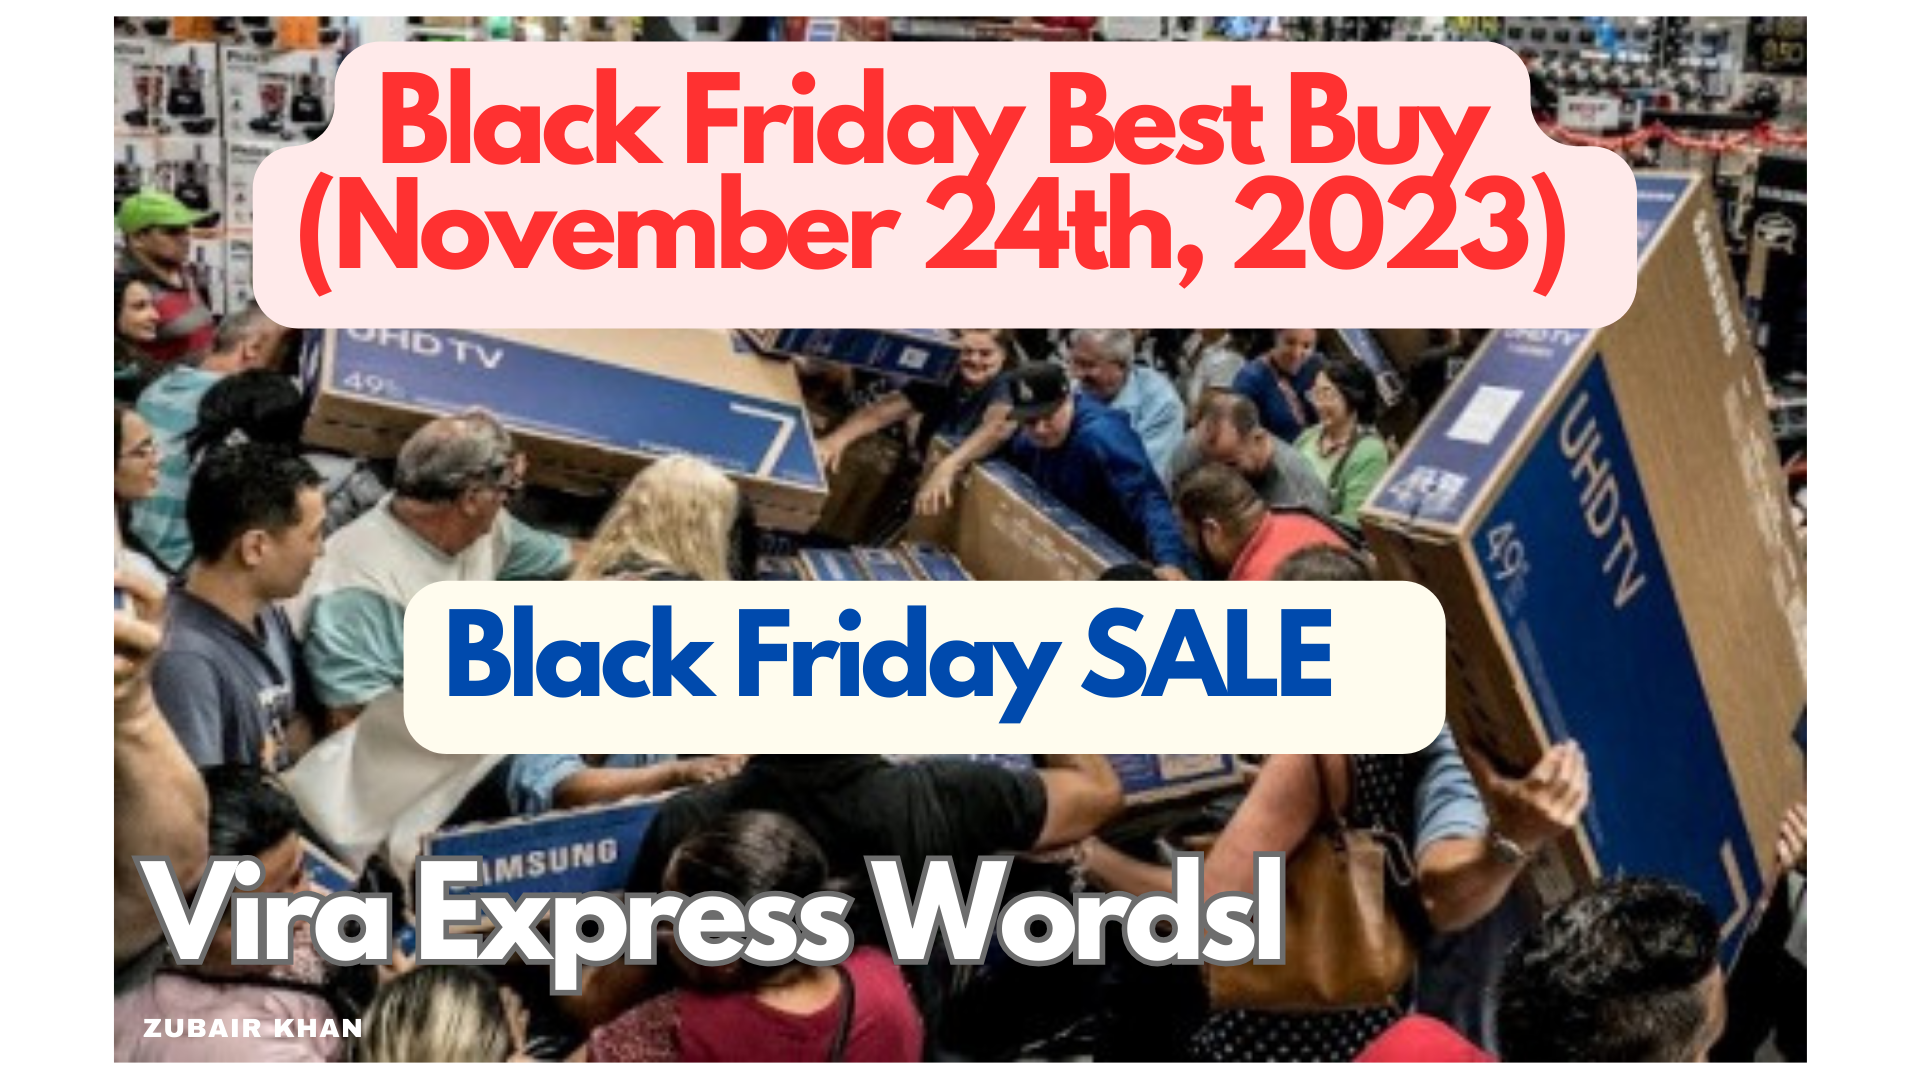 Black Friday Best Buy (November 24th, 2023)